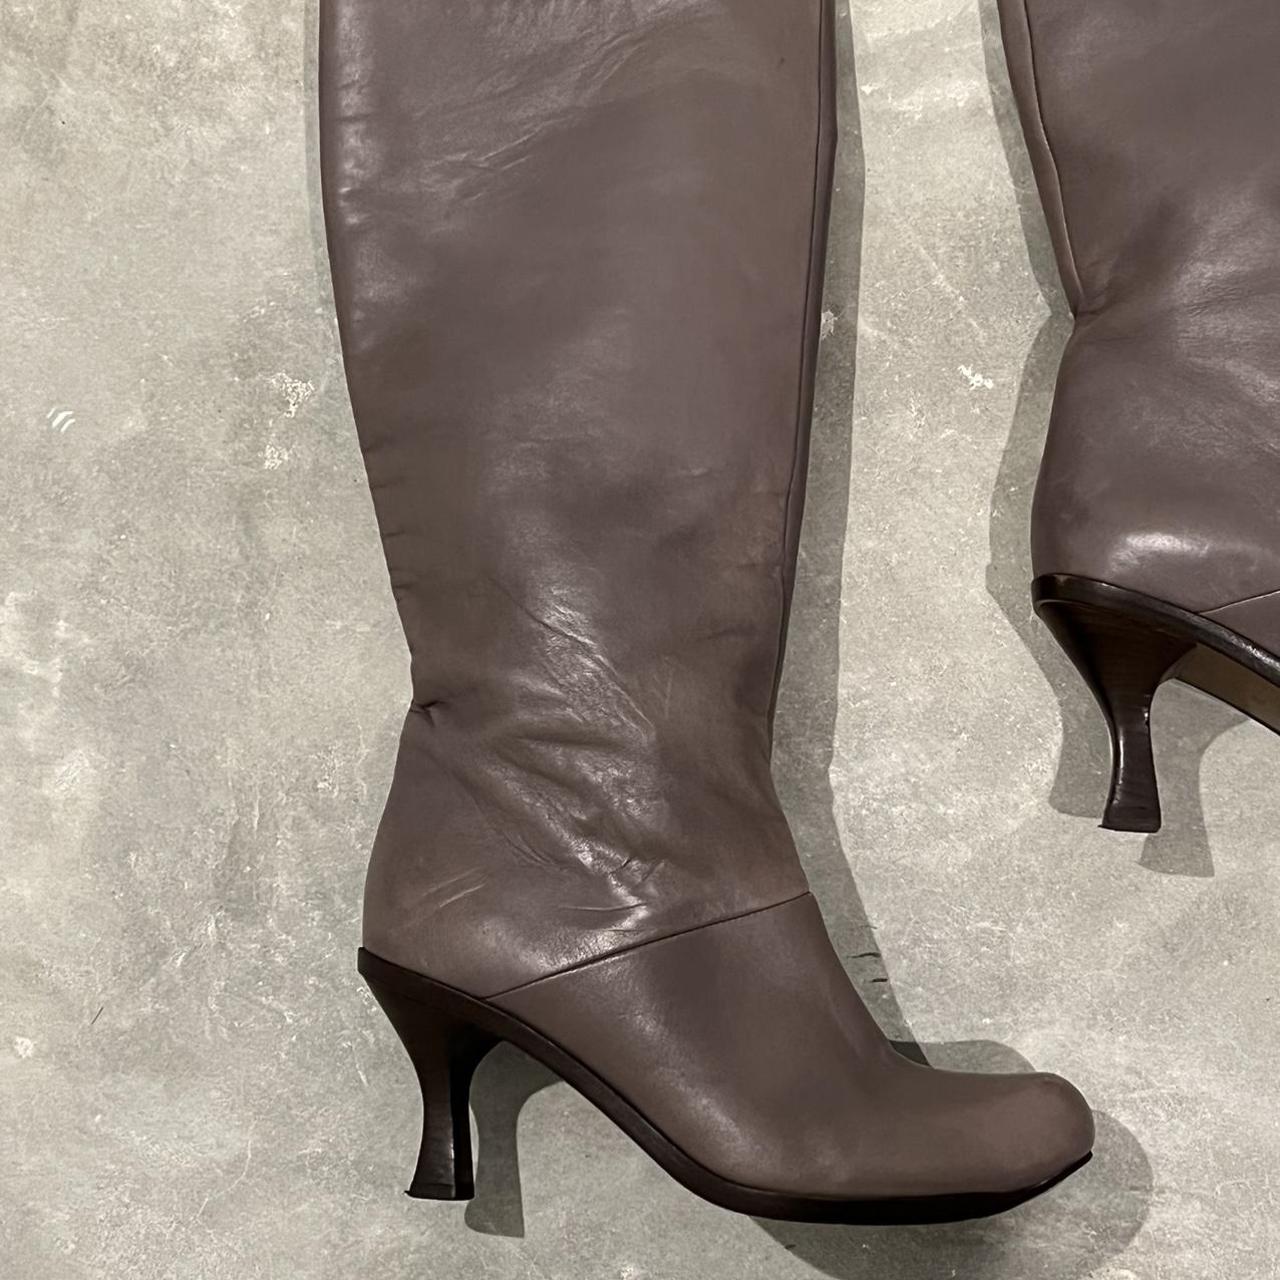 Product Image 2 - Marni Heel Boots

Measurements

Heel: 2.5ins

Length: 15.5ins

Calf: